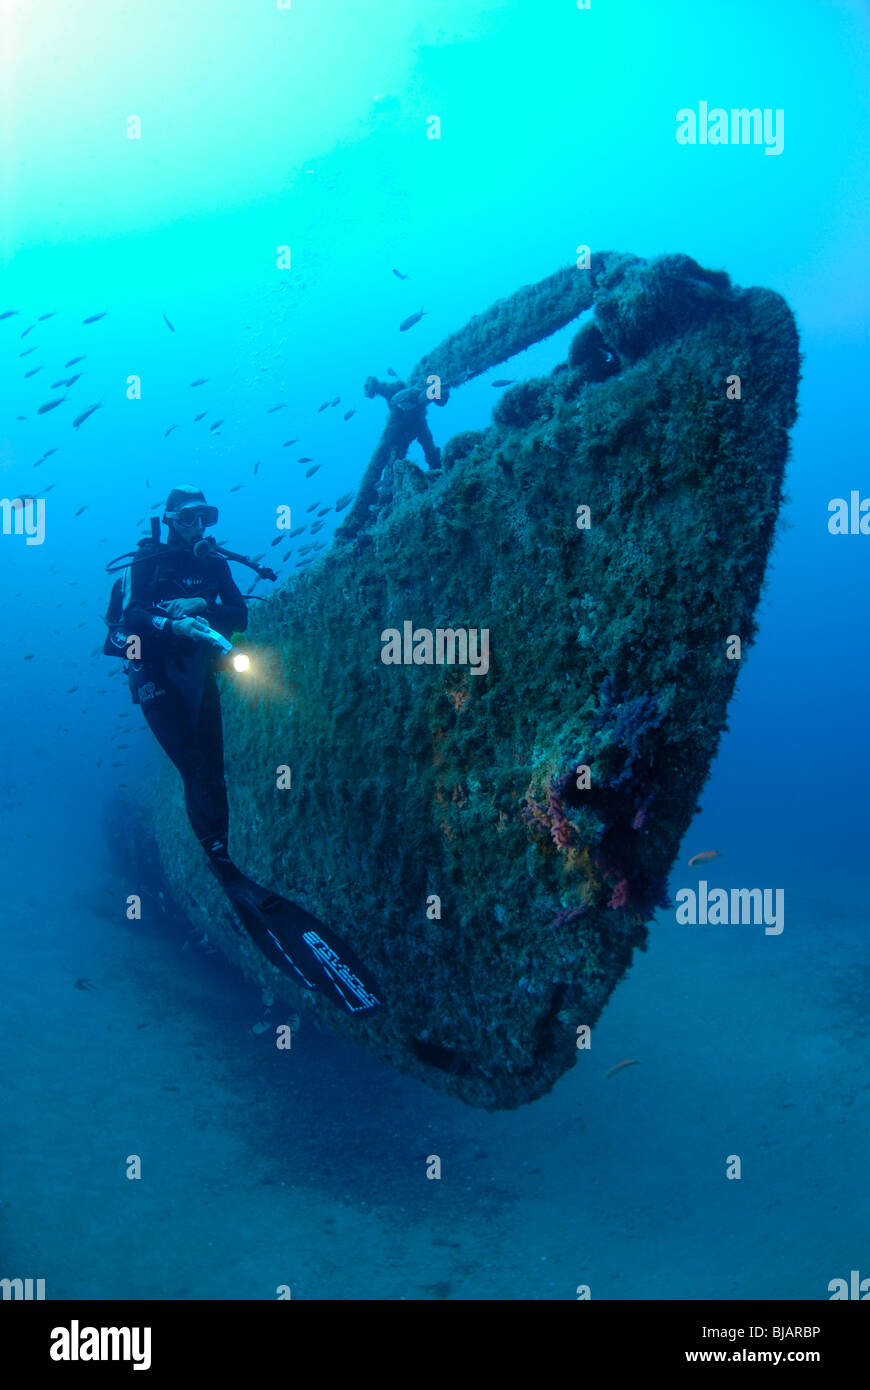 Diver exploring the Rubis wreck in the Mediterranean Sea Stock Photo